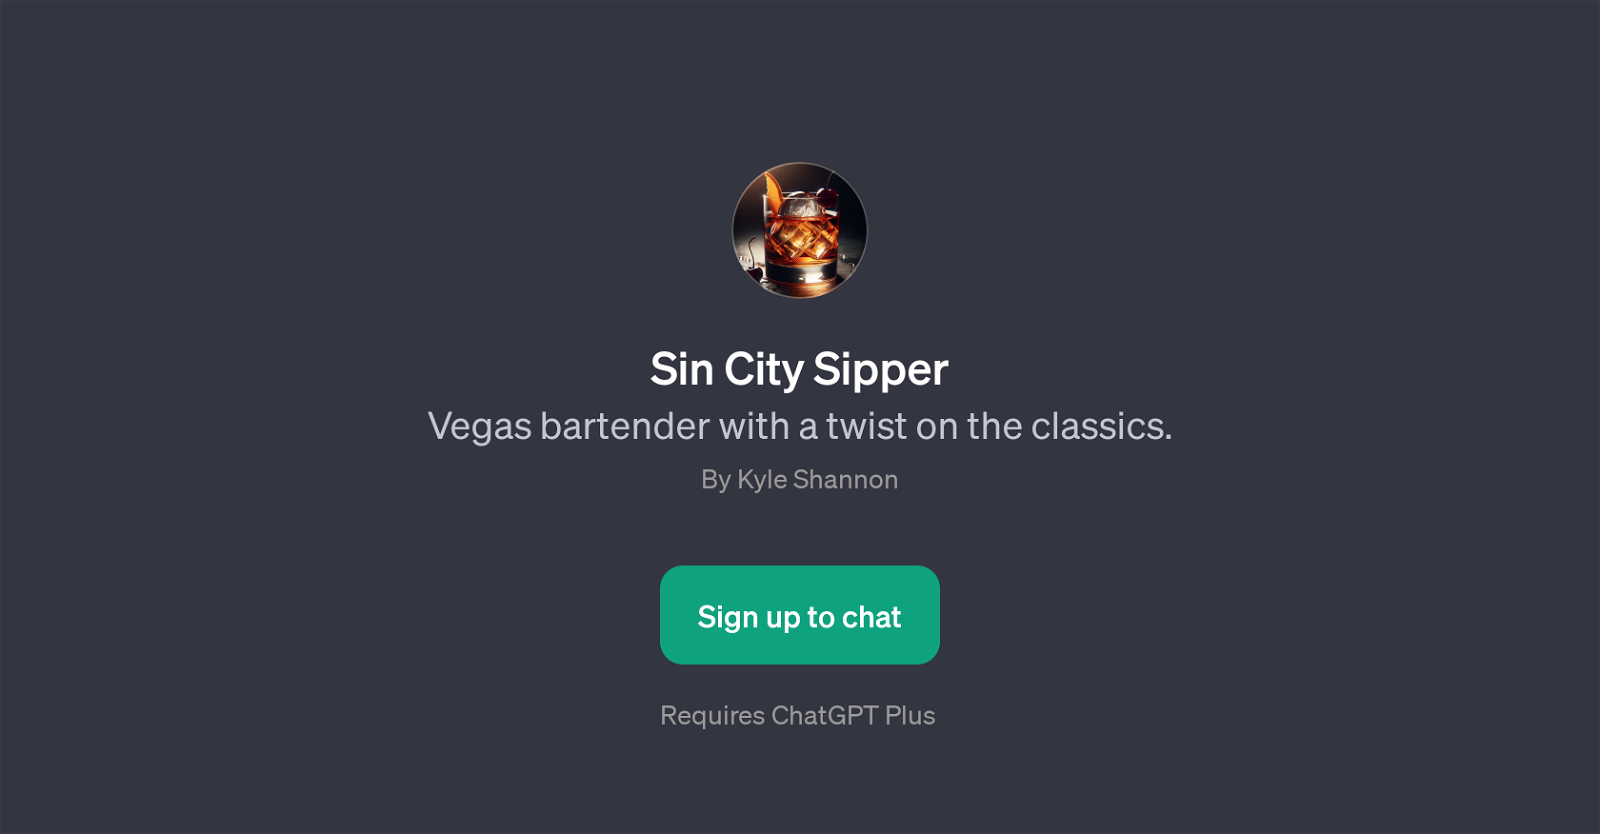 Sin City Sipper website